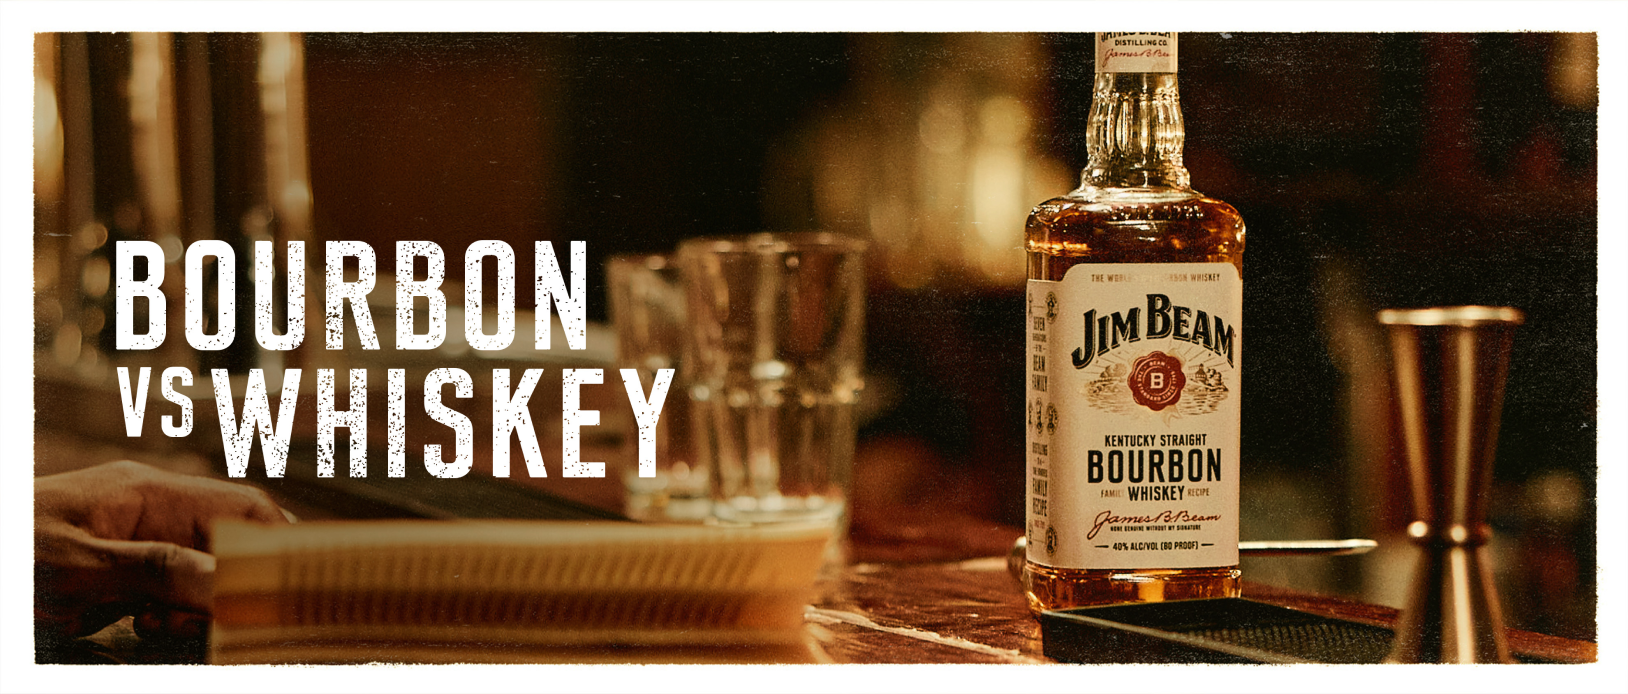 Bourbon vs whiskey